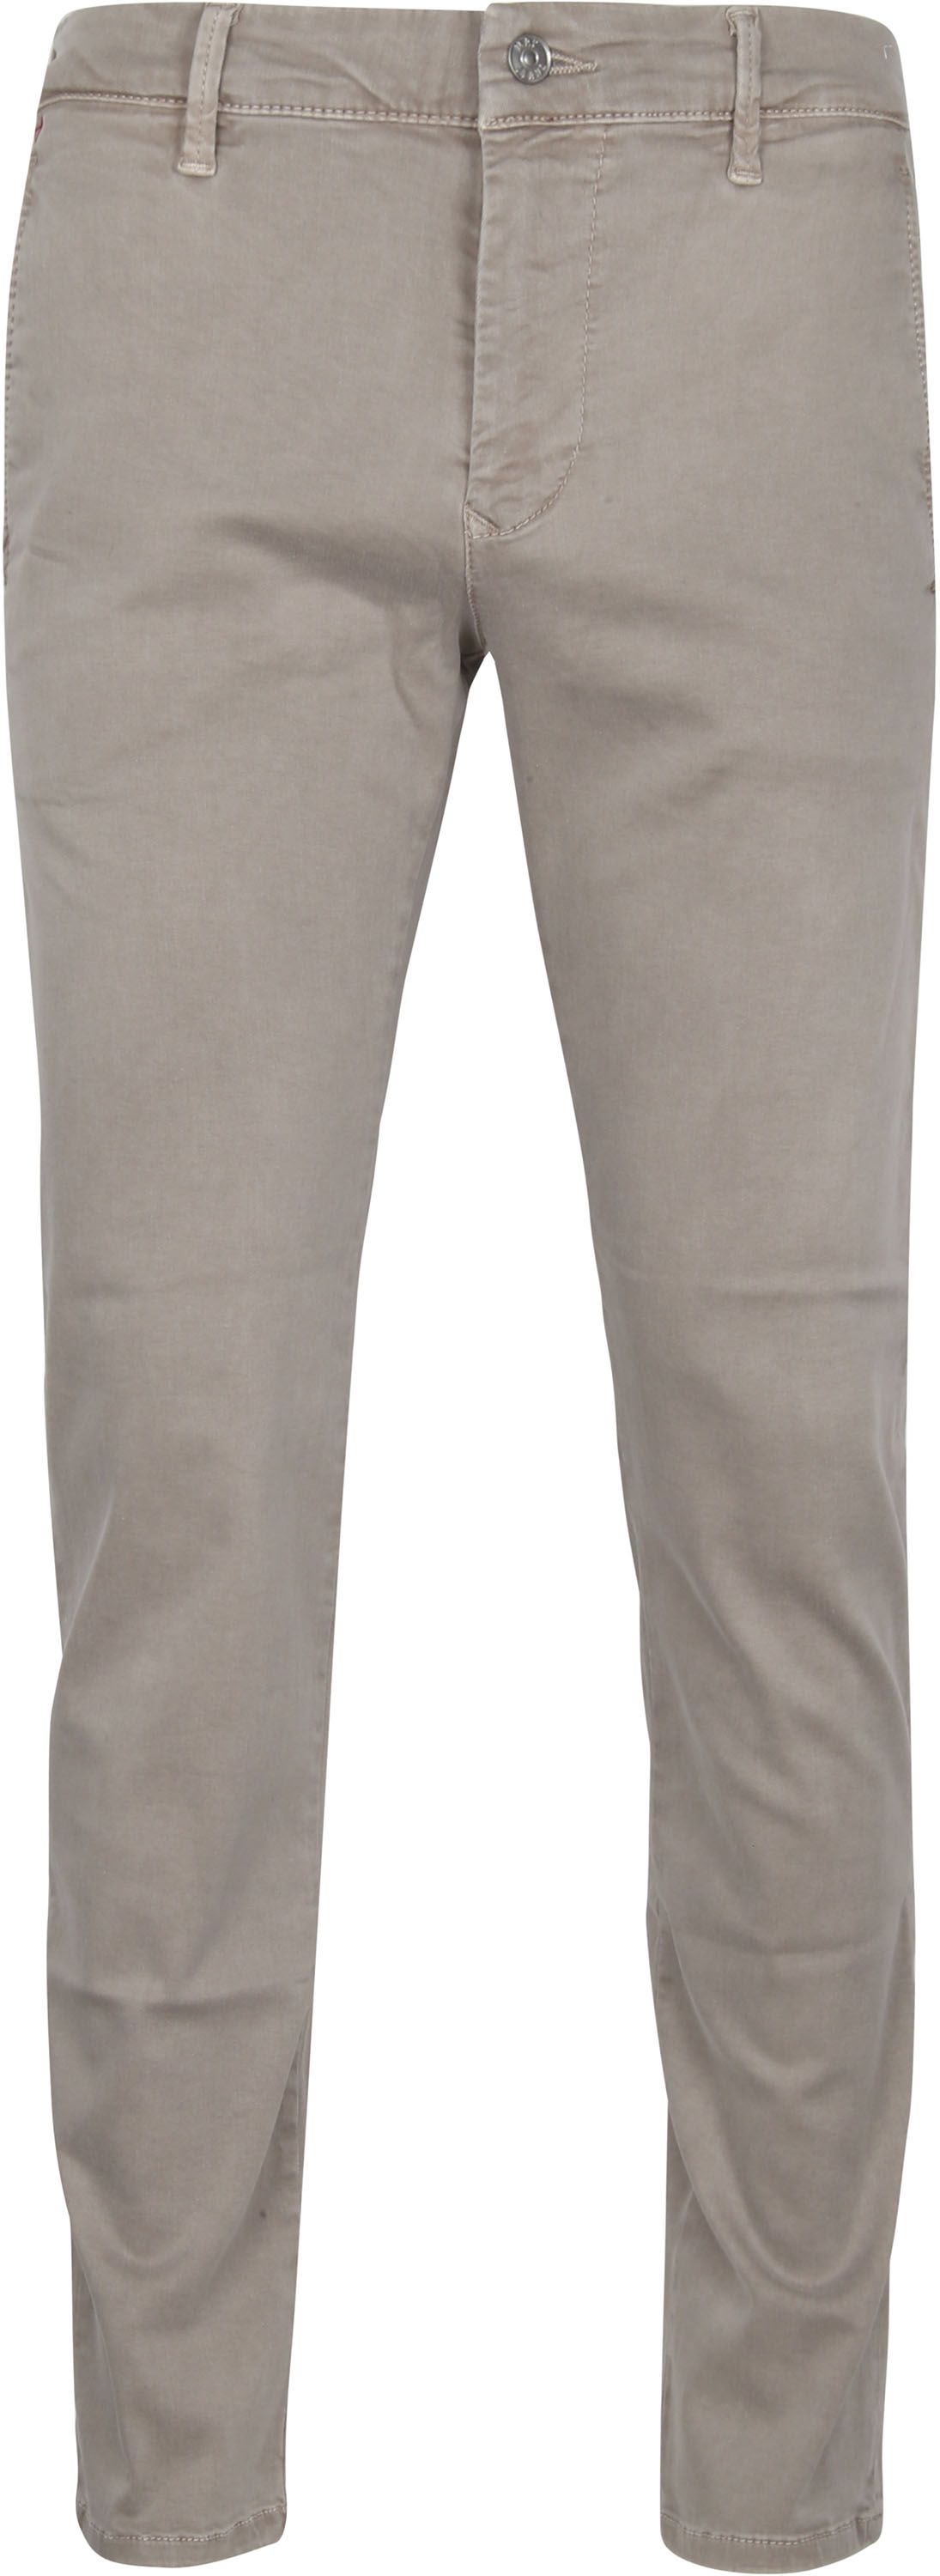 Mac Jeans Driver Pantalon Flexx Clair Gris taille W 31